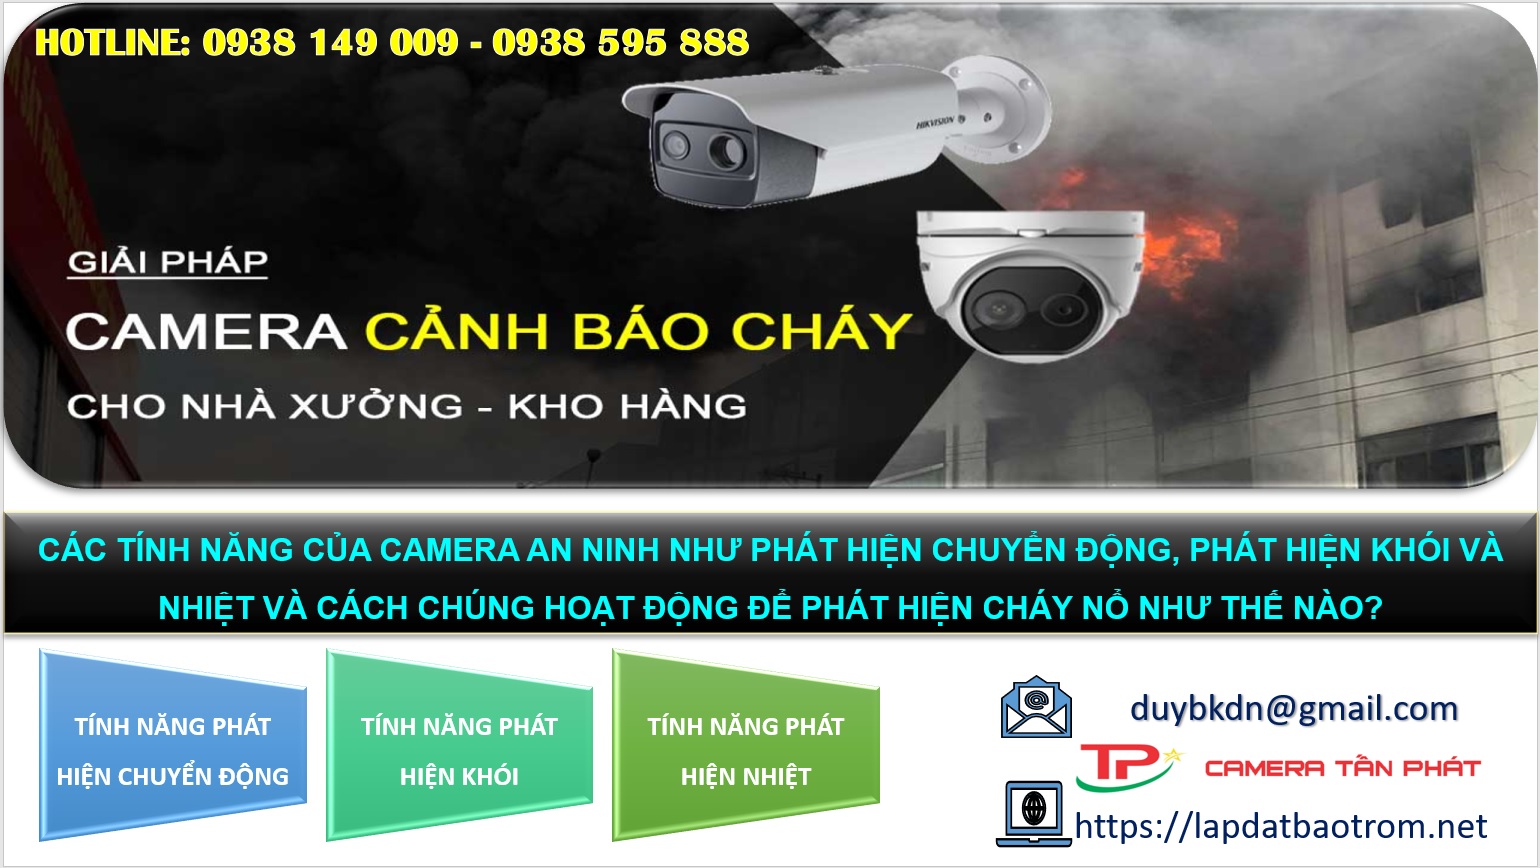 Cac Tinh Nang Cua Camera An Ninh Nhu Phat Hien Chuyen Dong Phat Hien Khoi Va Nhiet Va Cach Chung Hoat Dong De Phat Hien Chay No Nhu The Nao